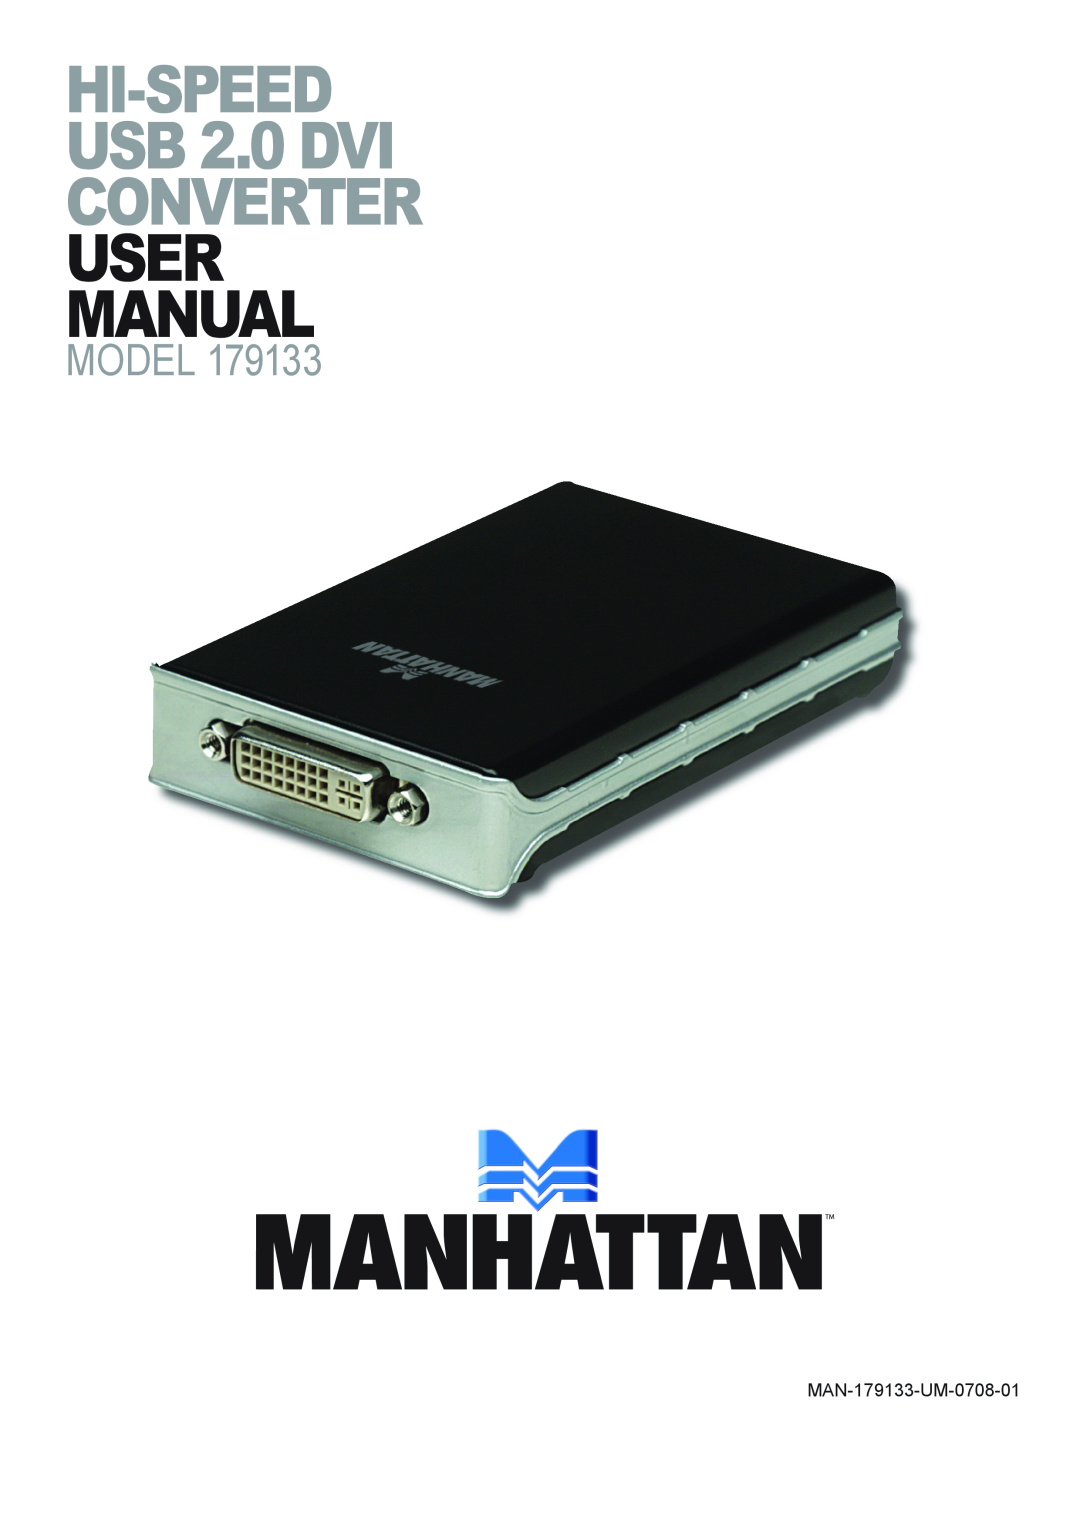 Manhattan Computer Products user manual Hi-Speed, Model, MAN-179133-UM-0708-01 